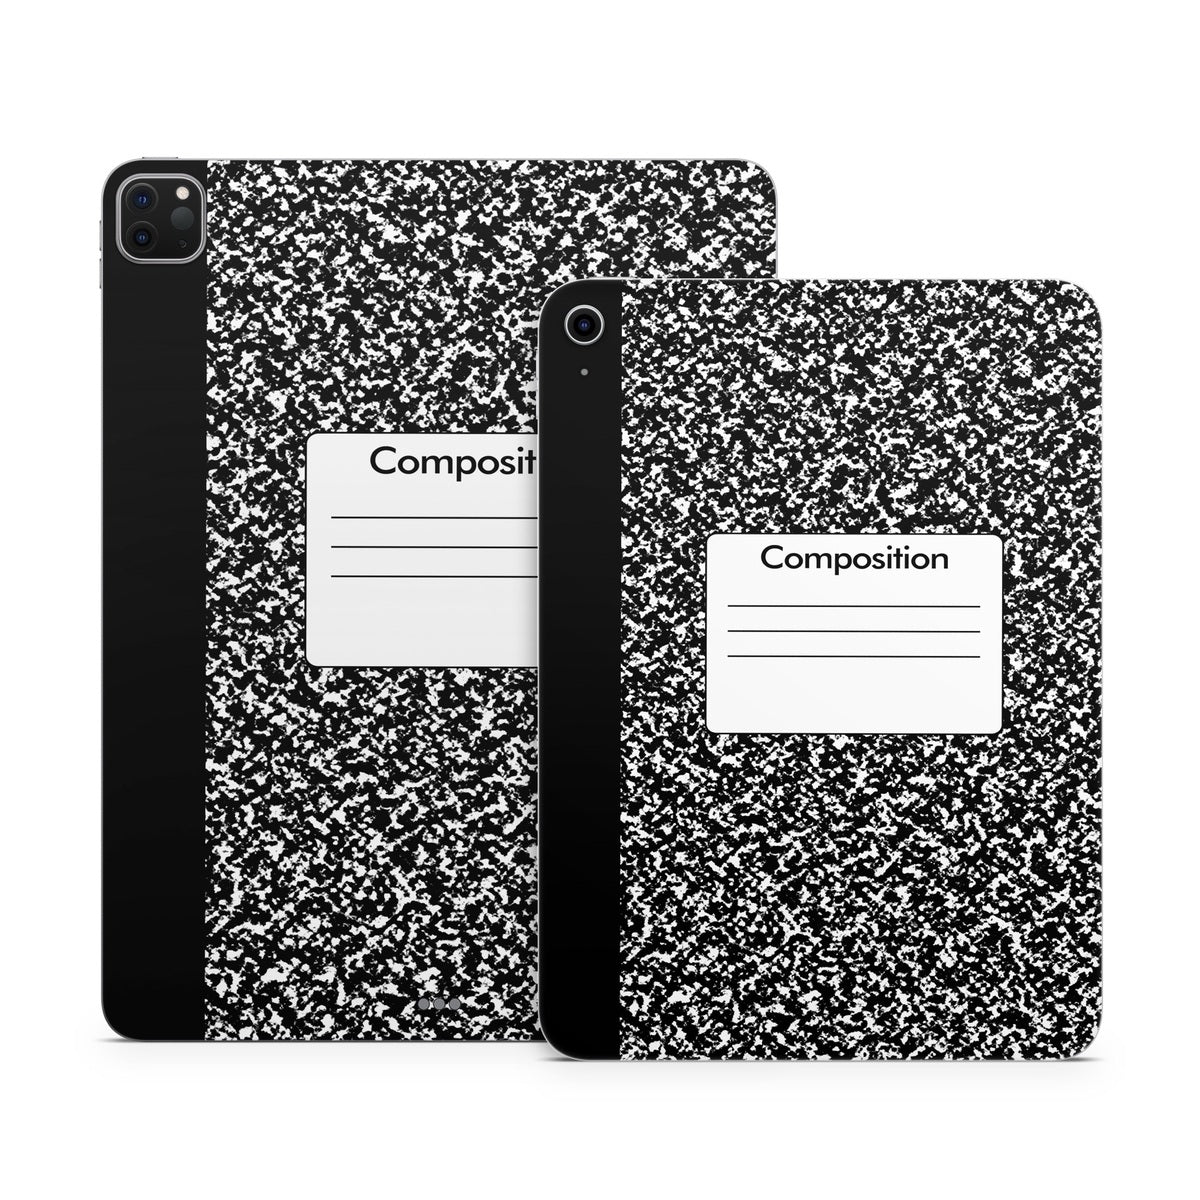 Composition Notebook - Apple iPad Skin